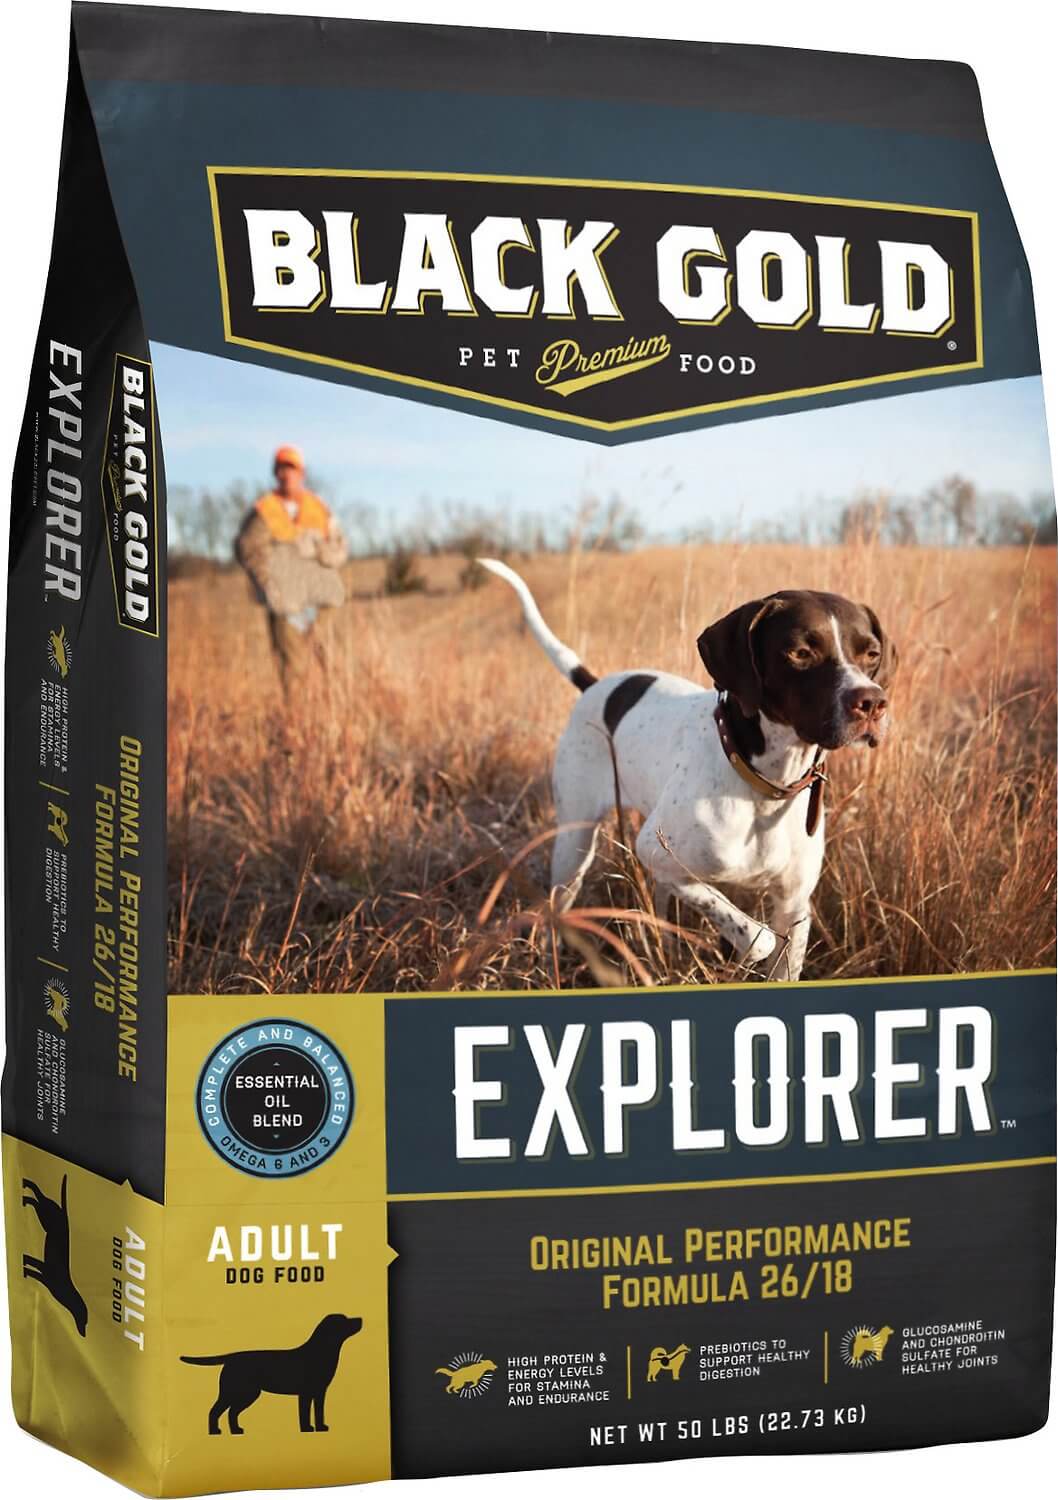 Black and Gold Explorer Original Performance Dry Dog Food